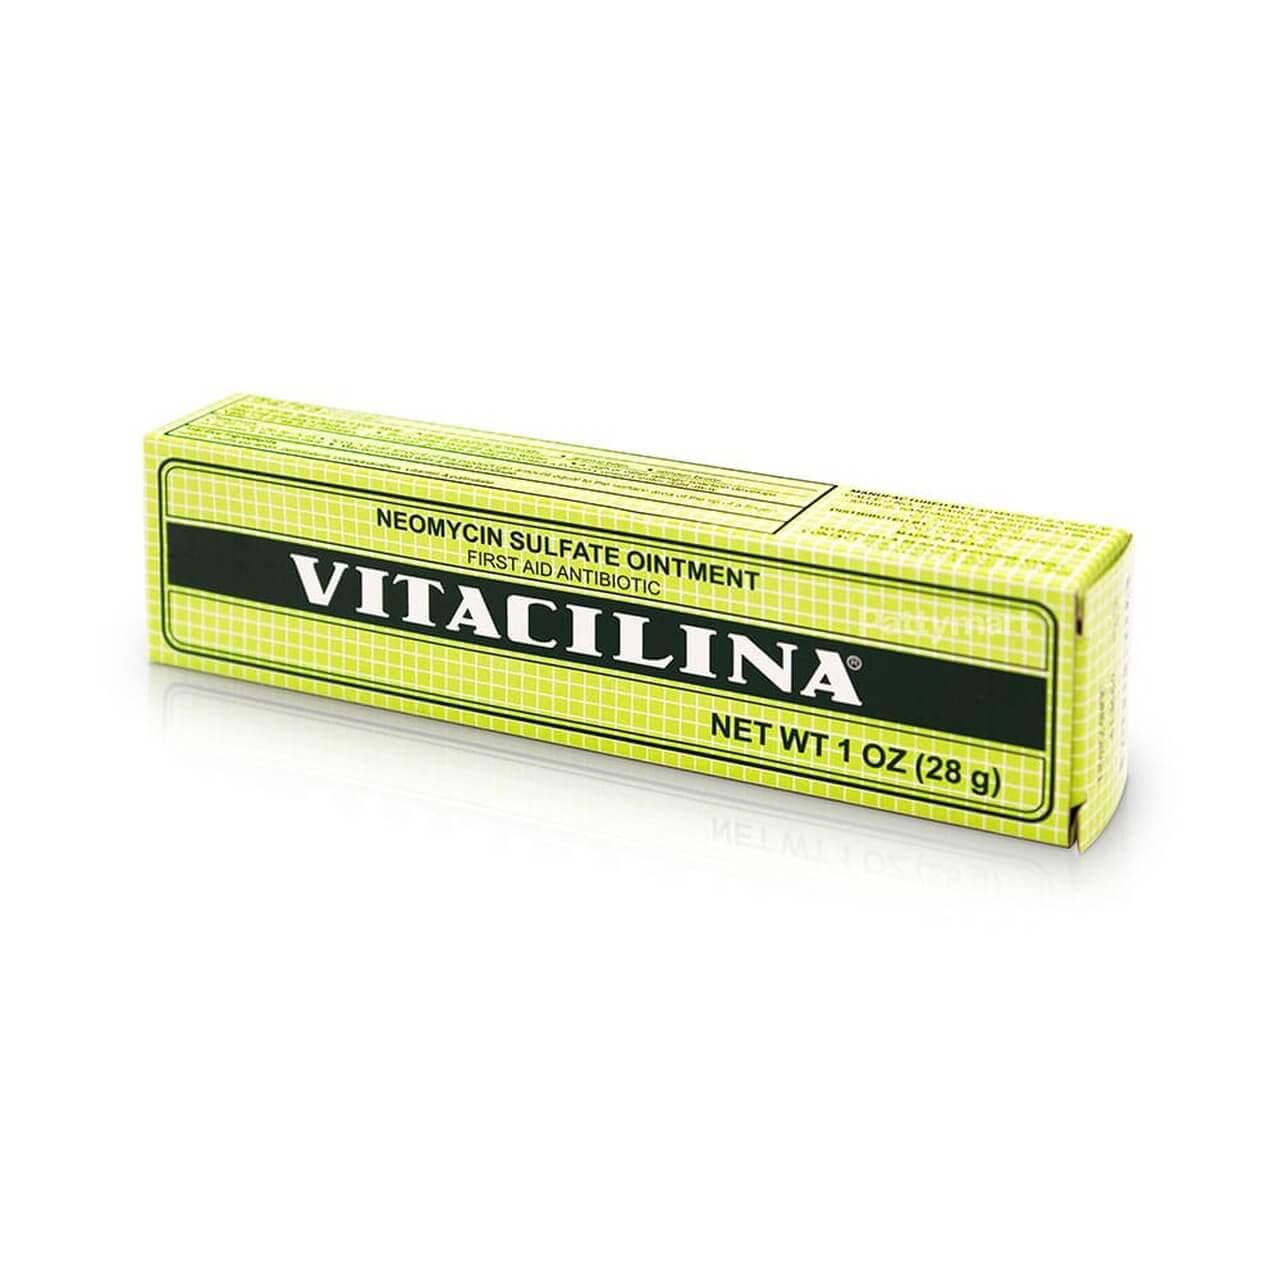 Vitacilina - Neomycin Sulfate Ointment 1oz